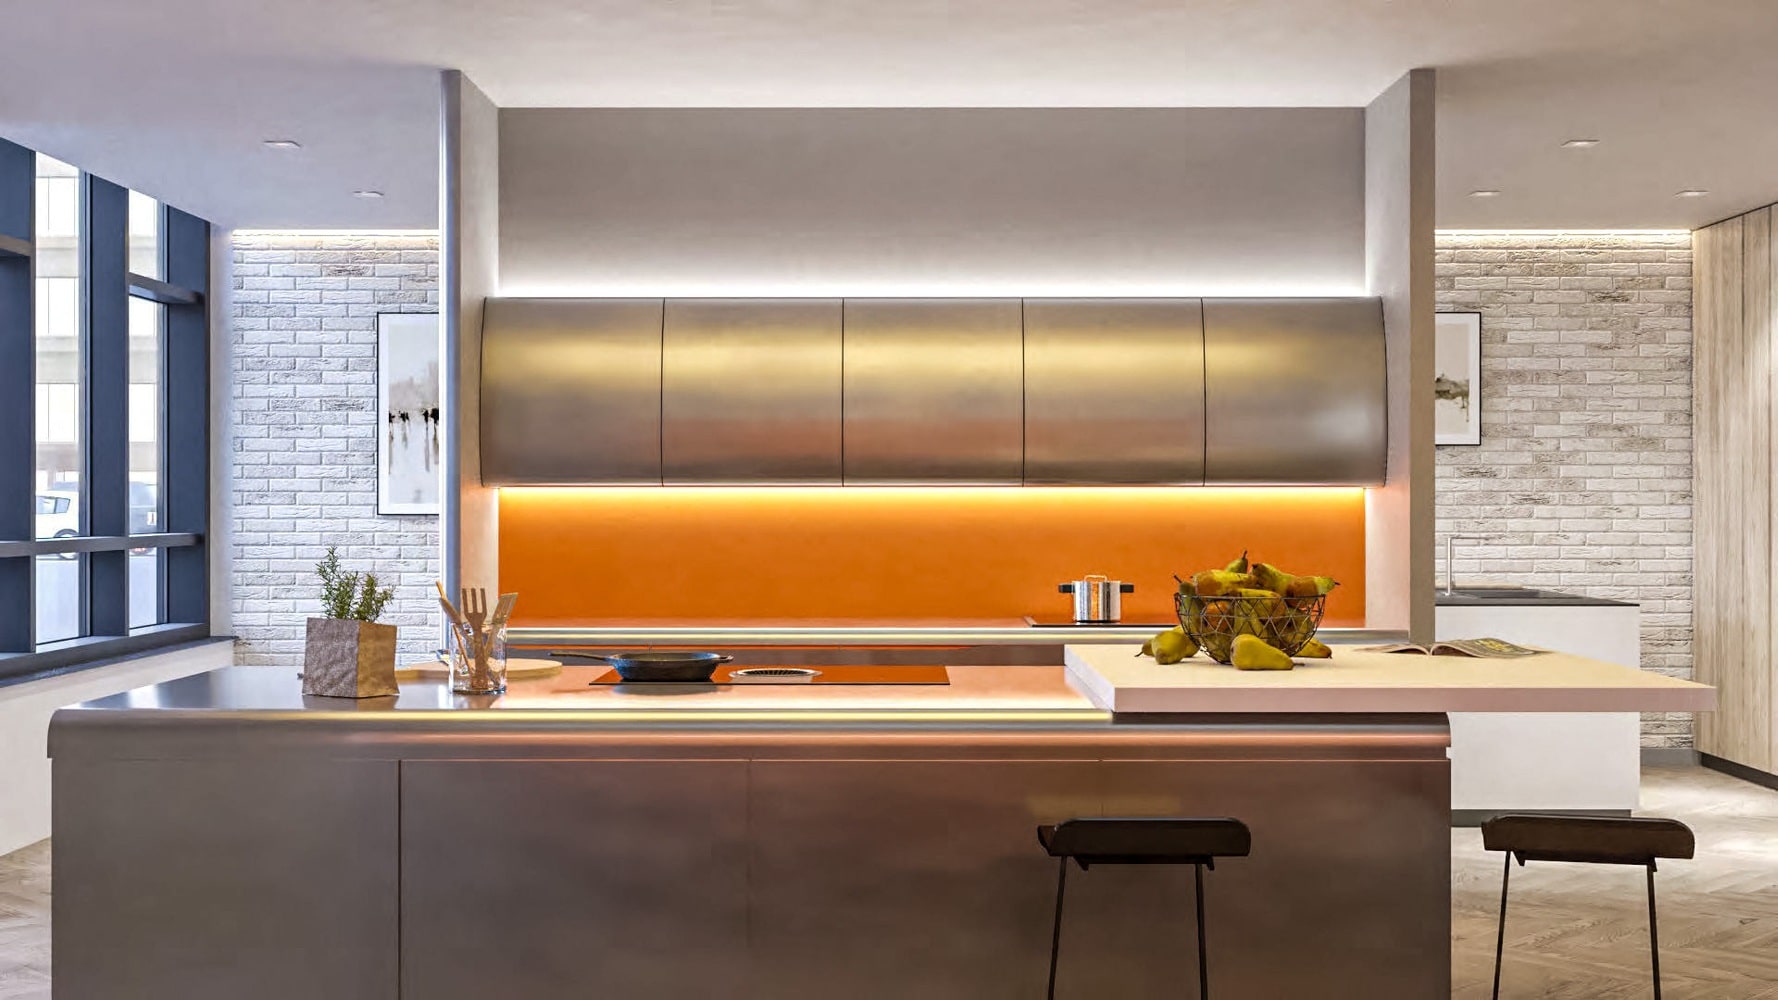 Miami Kitchen, in partnership with Biefbi, 2015